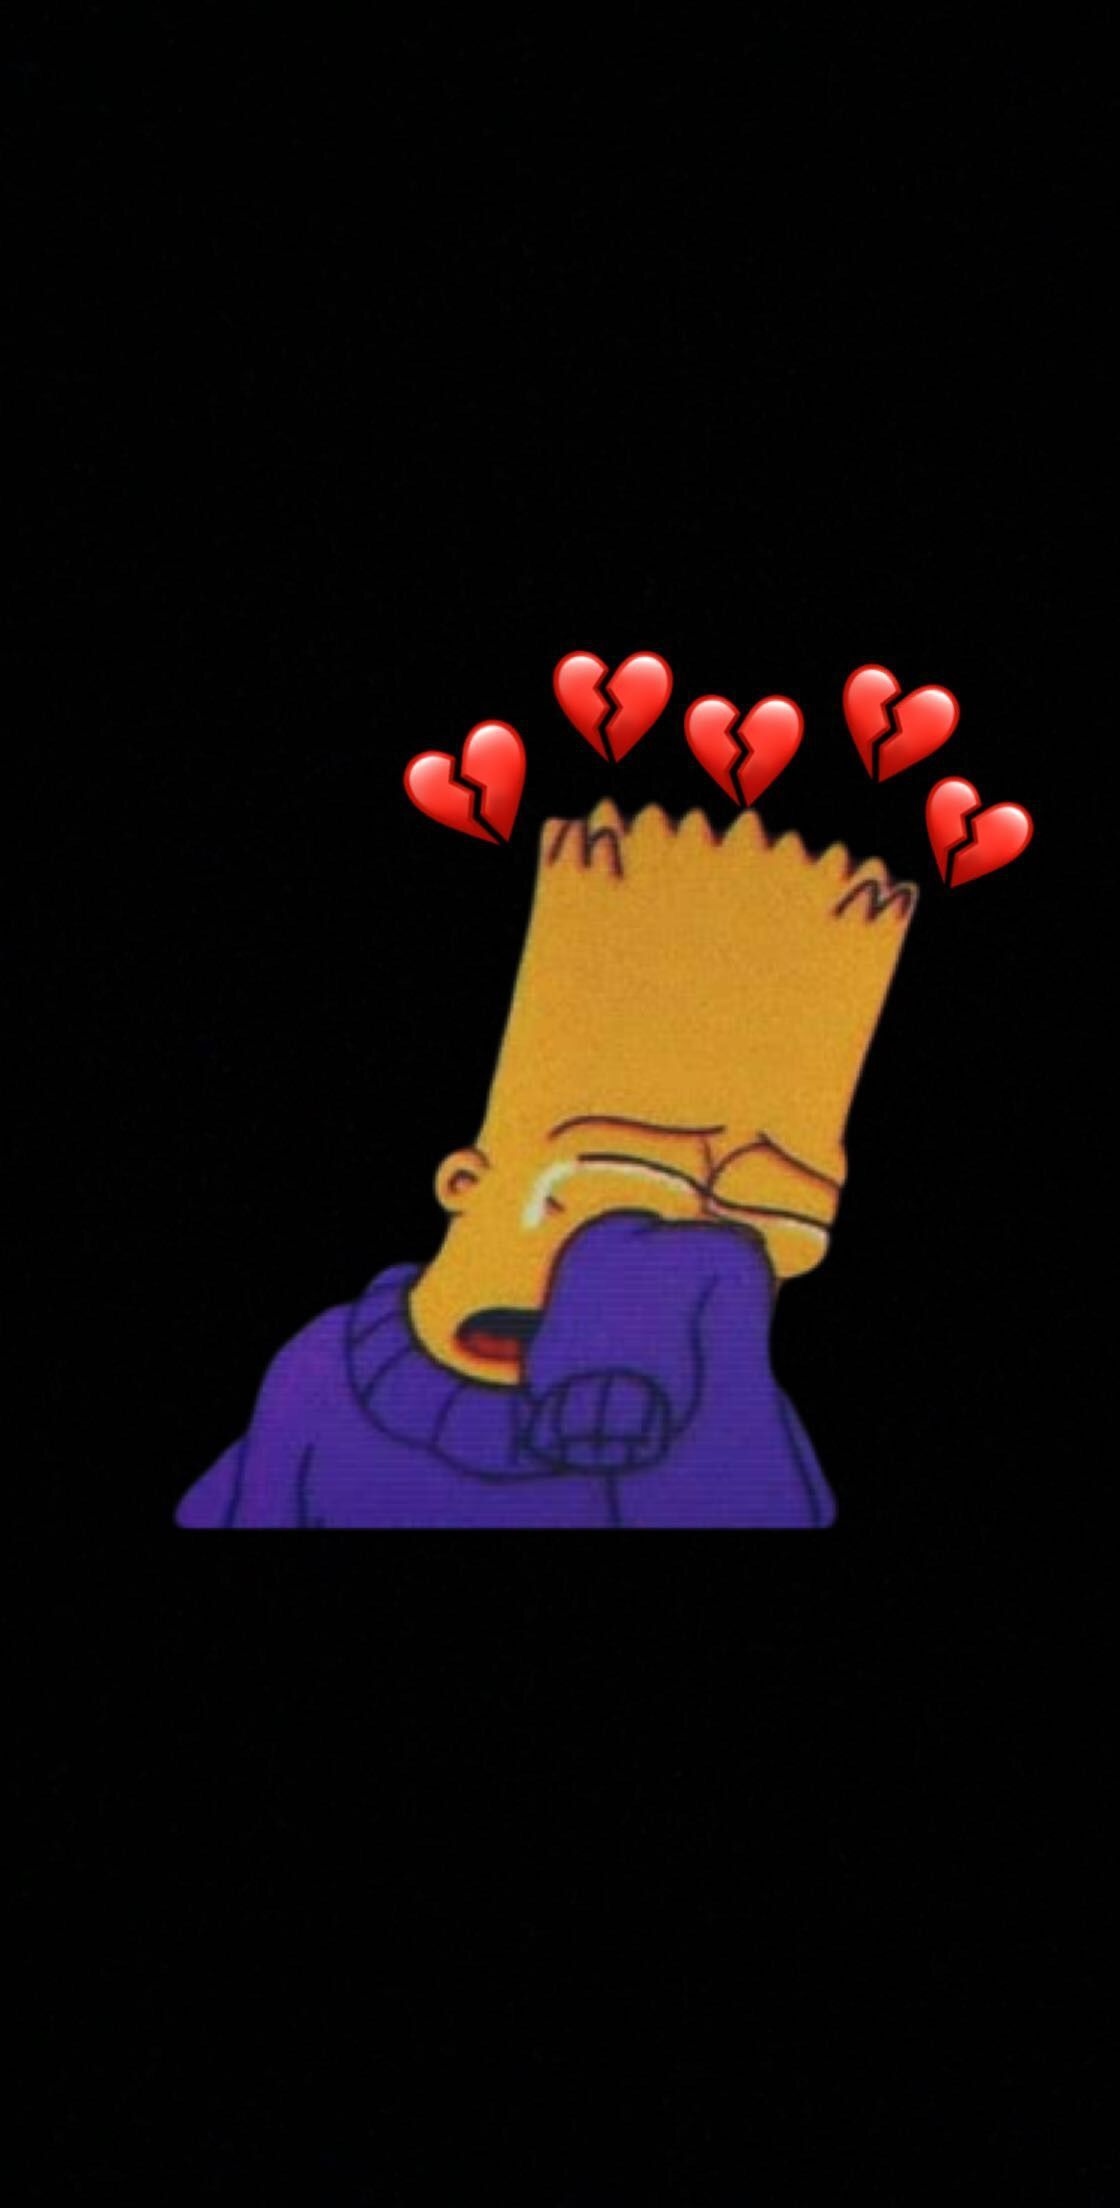 Breakup - Simpson Crying Emoji